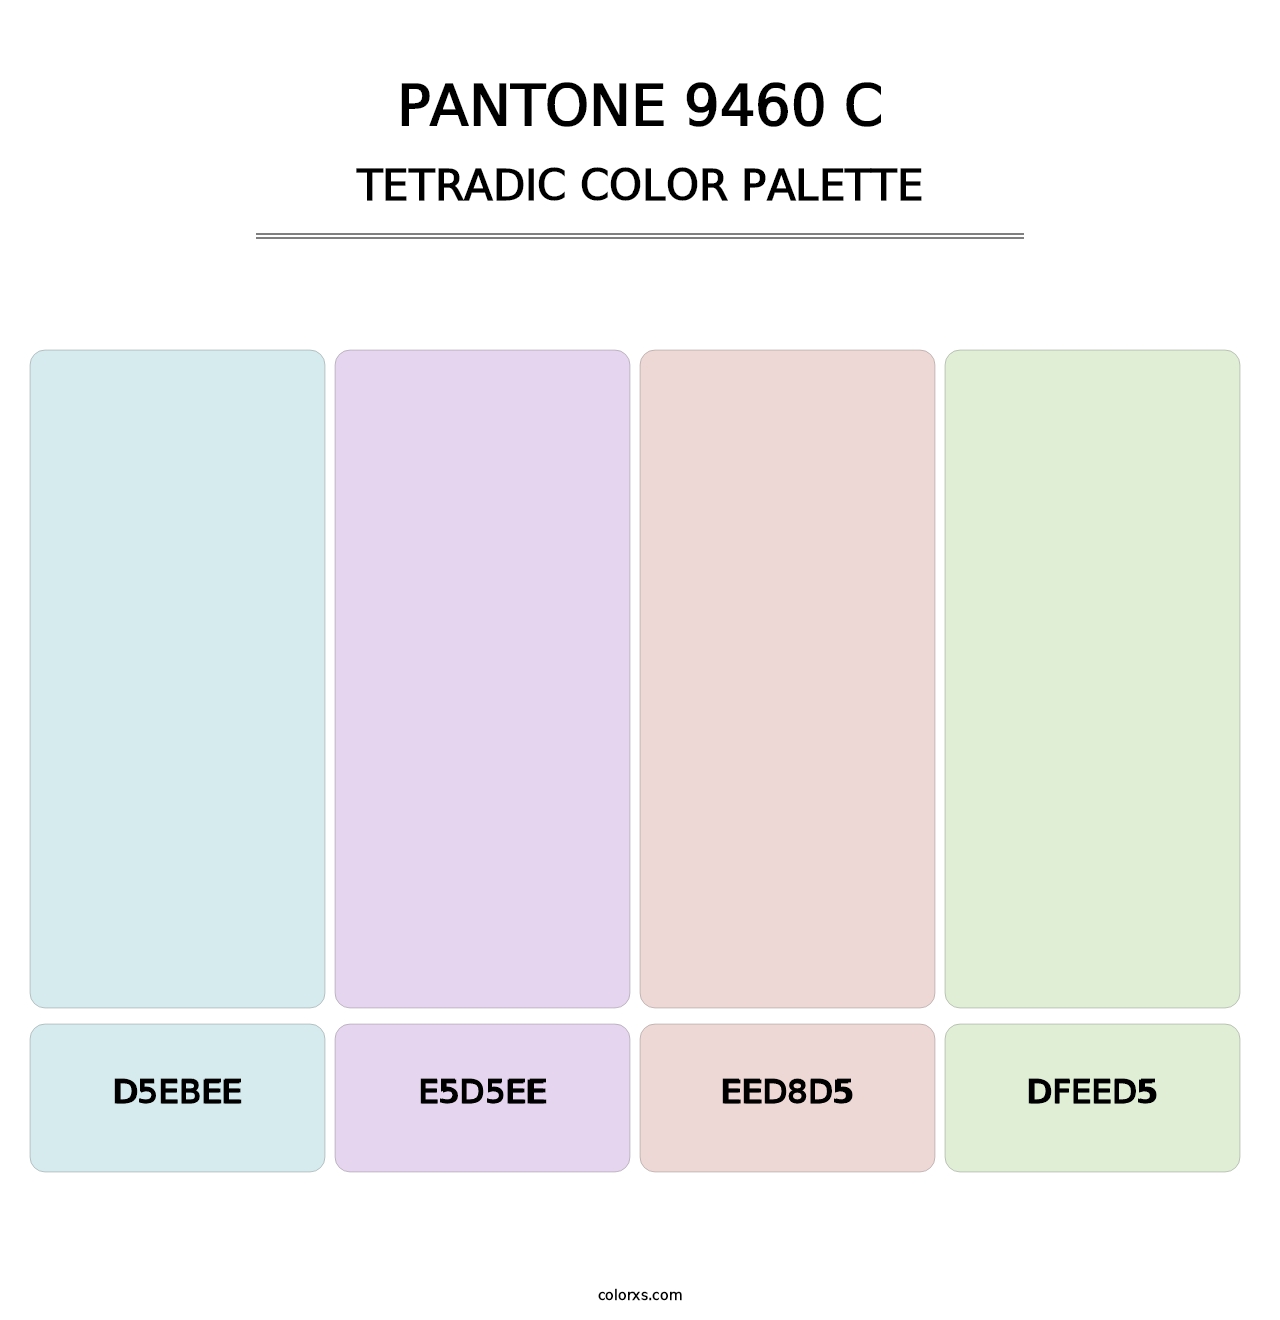 PANTONE 9460 C - Tetradic Color Palette